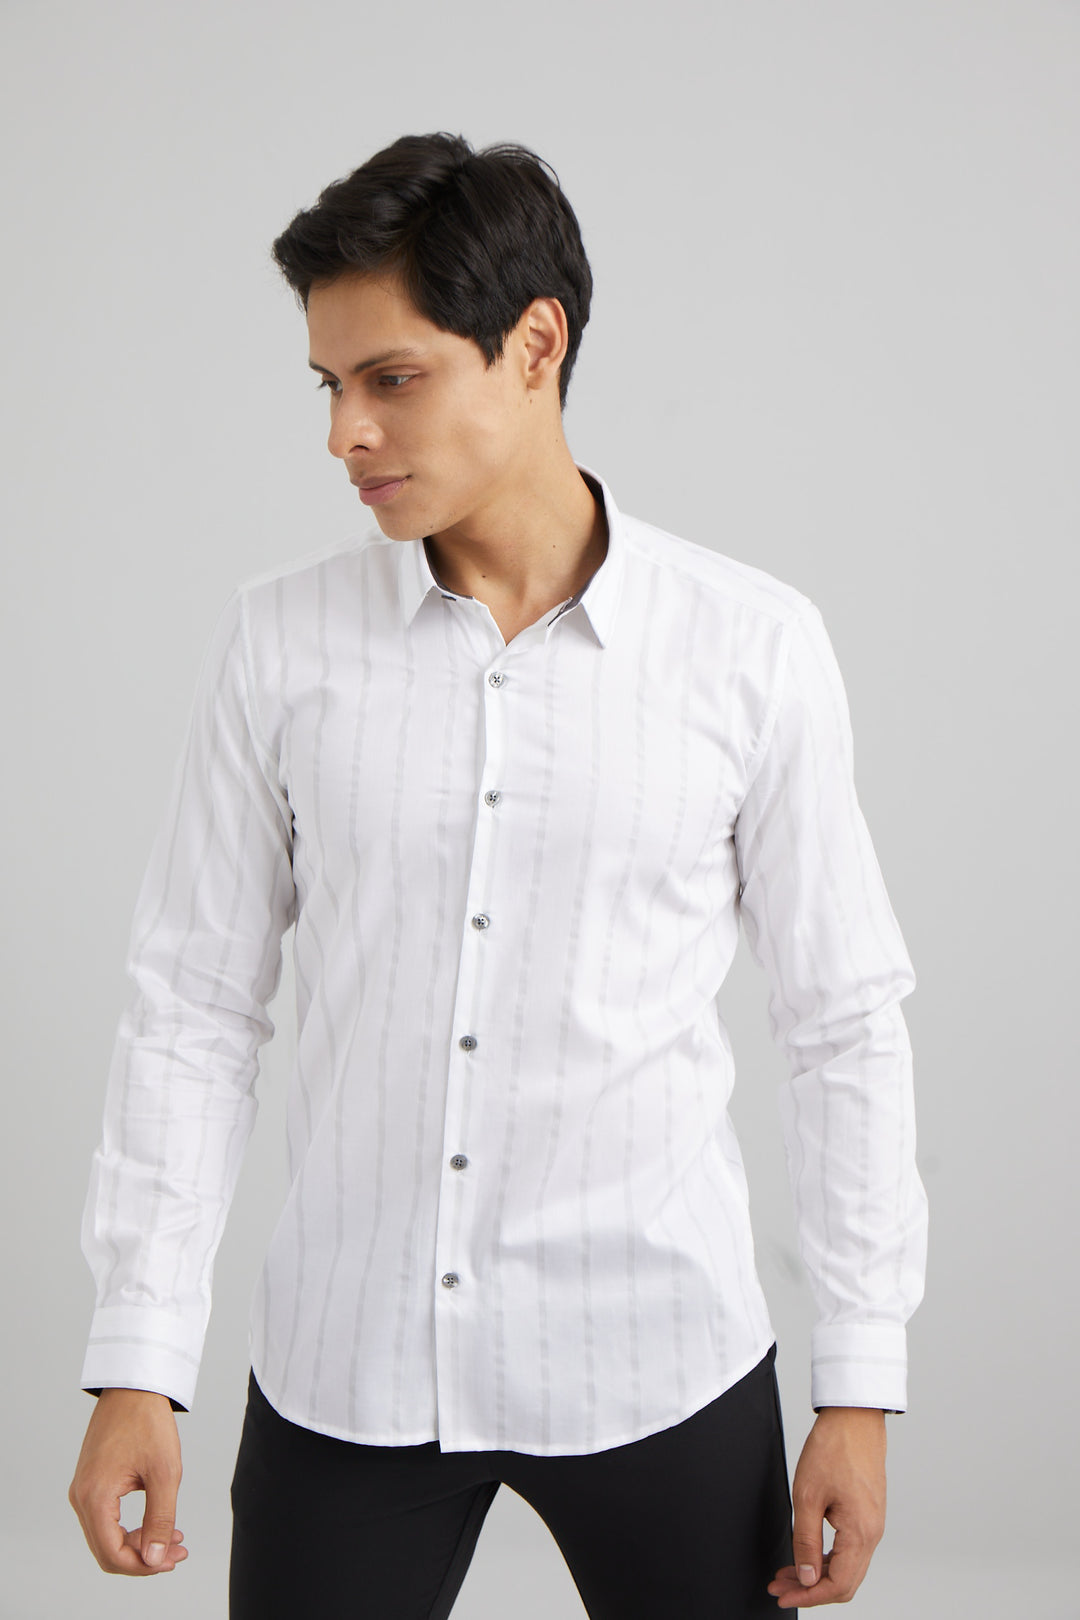 Clasico White Shirt - SNITCH